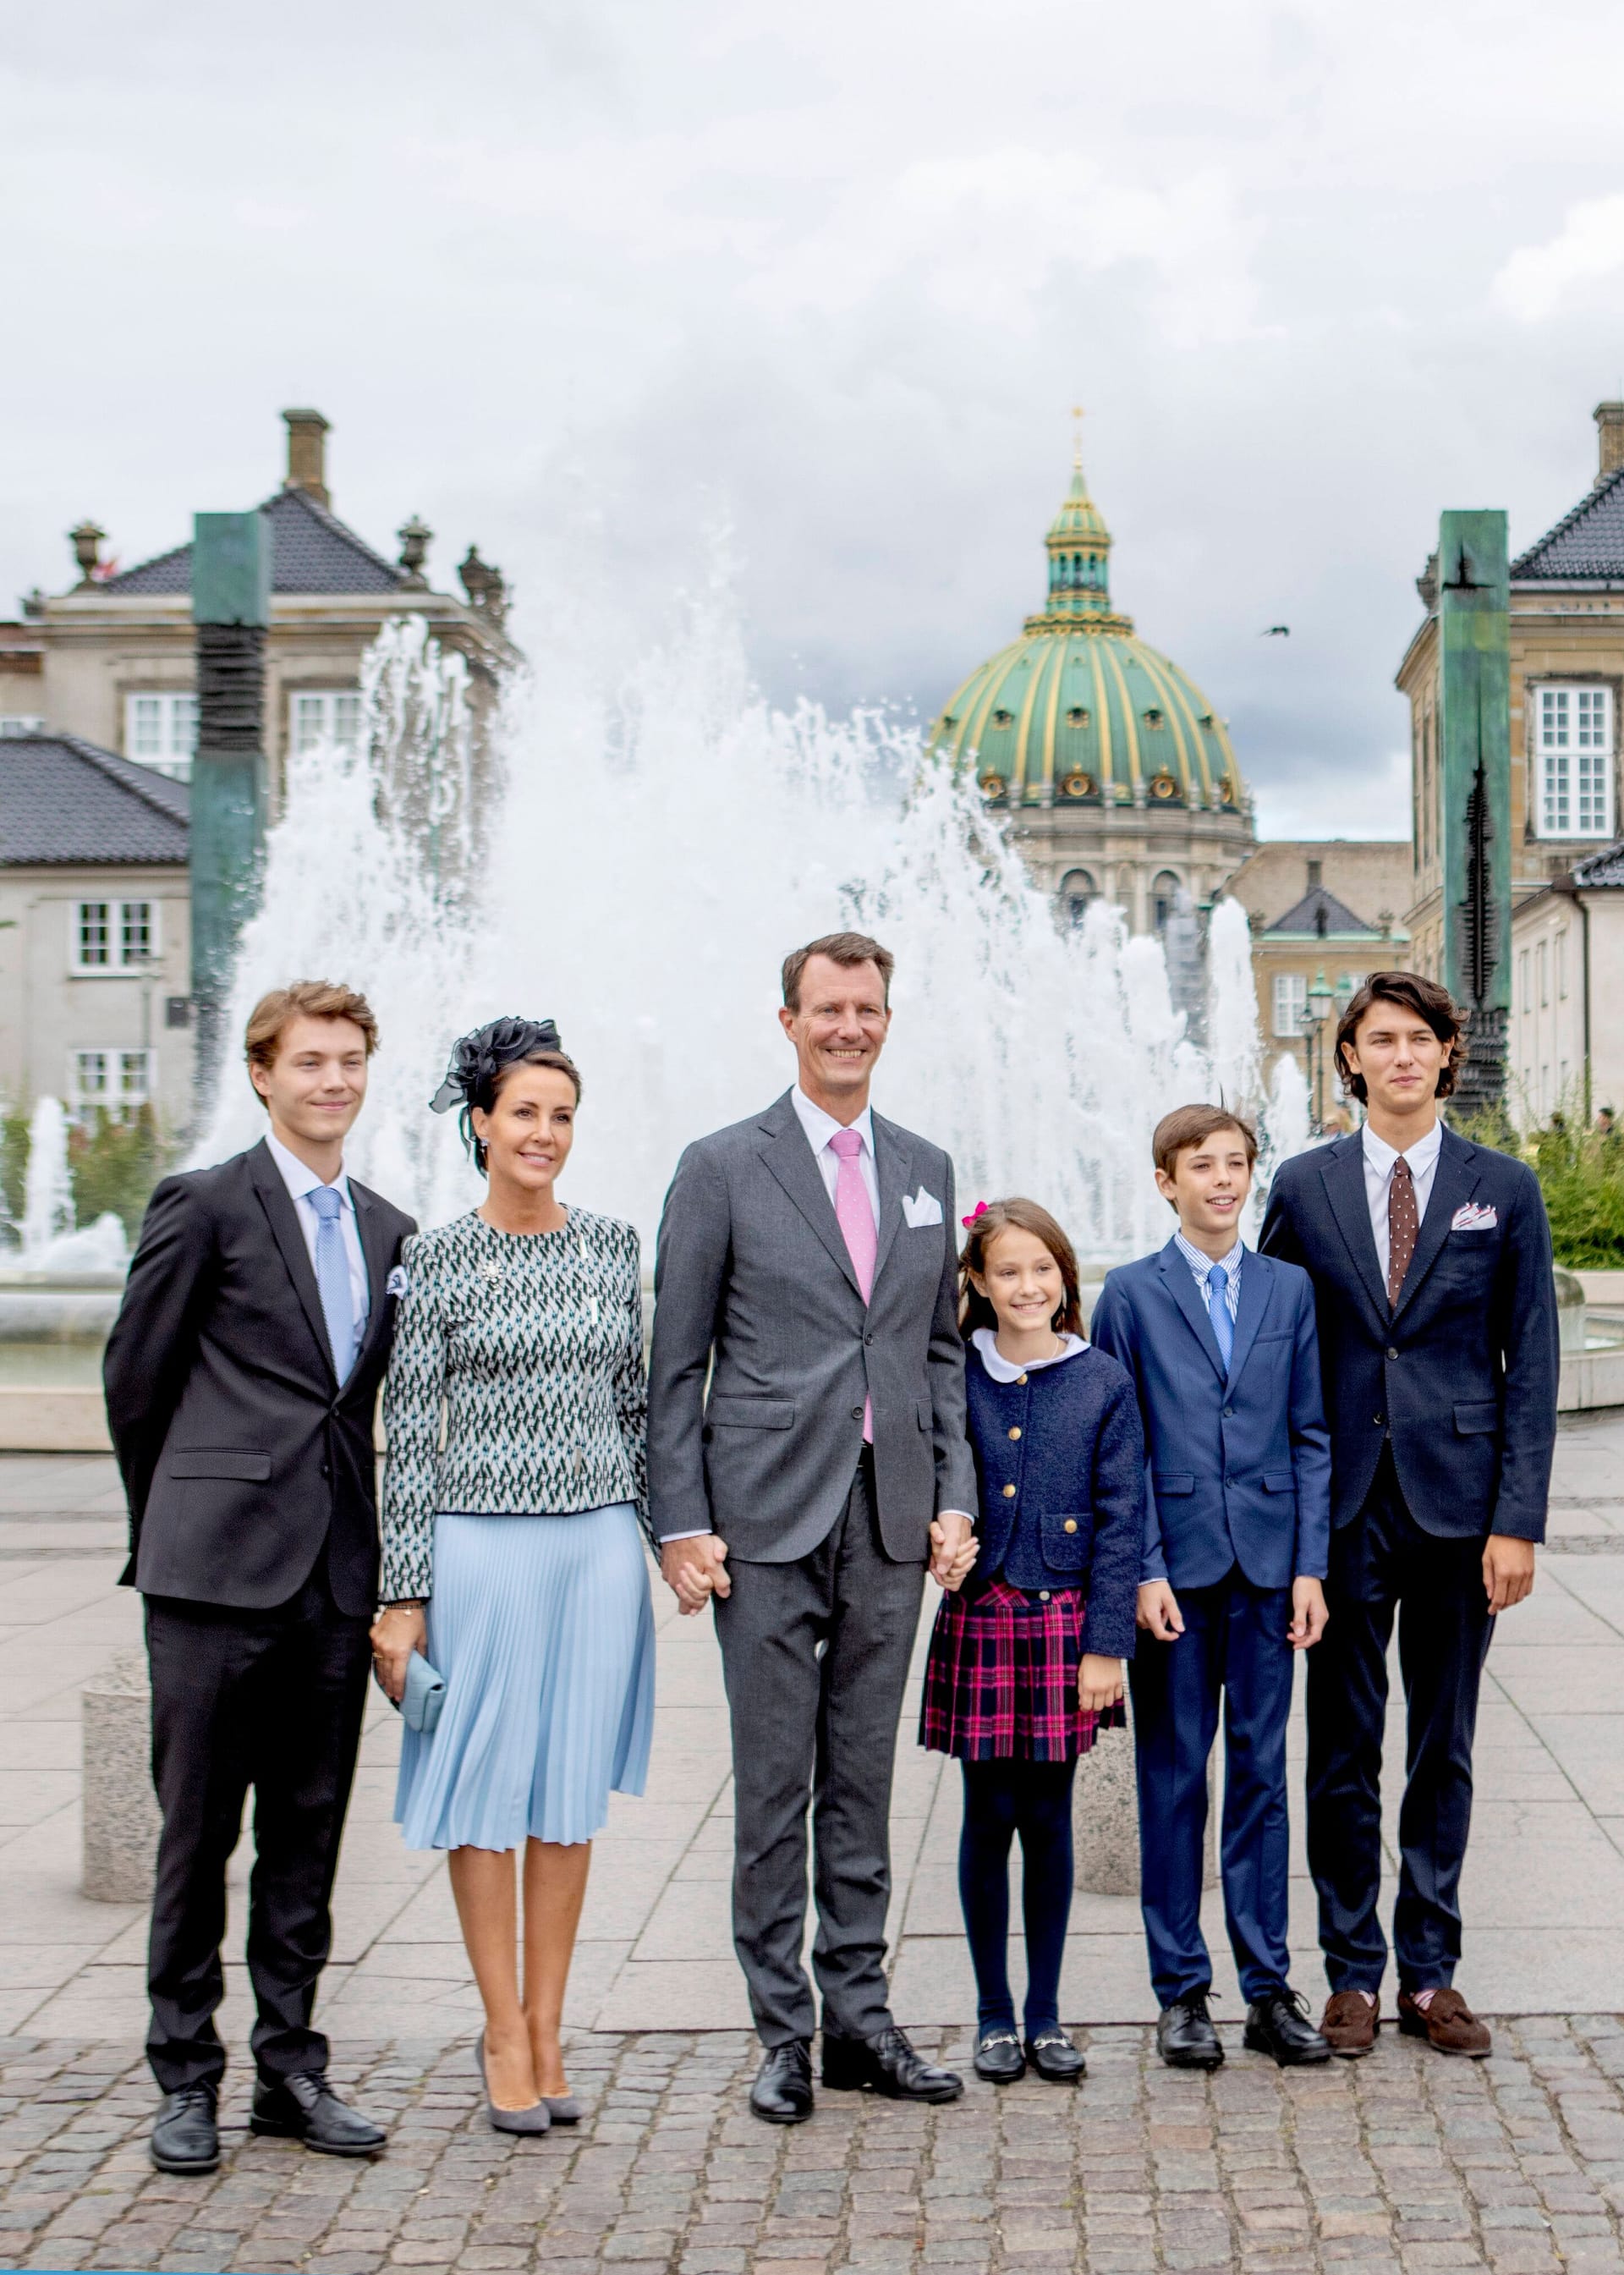 September 2022: Prinz Felix, Prinzessin Marie, Prinz Joachim, Prinzessin Athena, Prinz Henrik und Prinz Nikolai posieren in Kopenhagen.